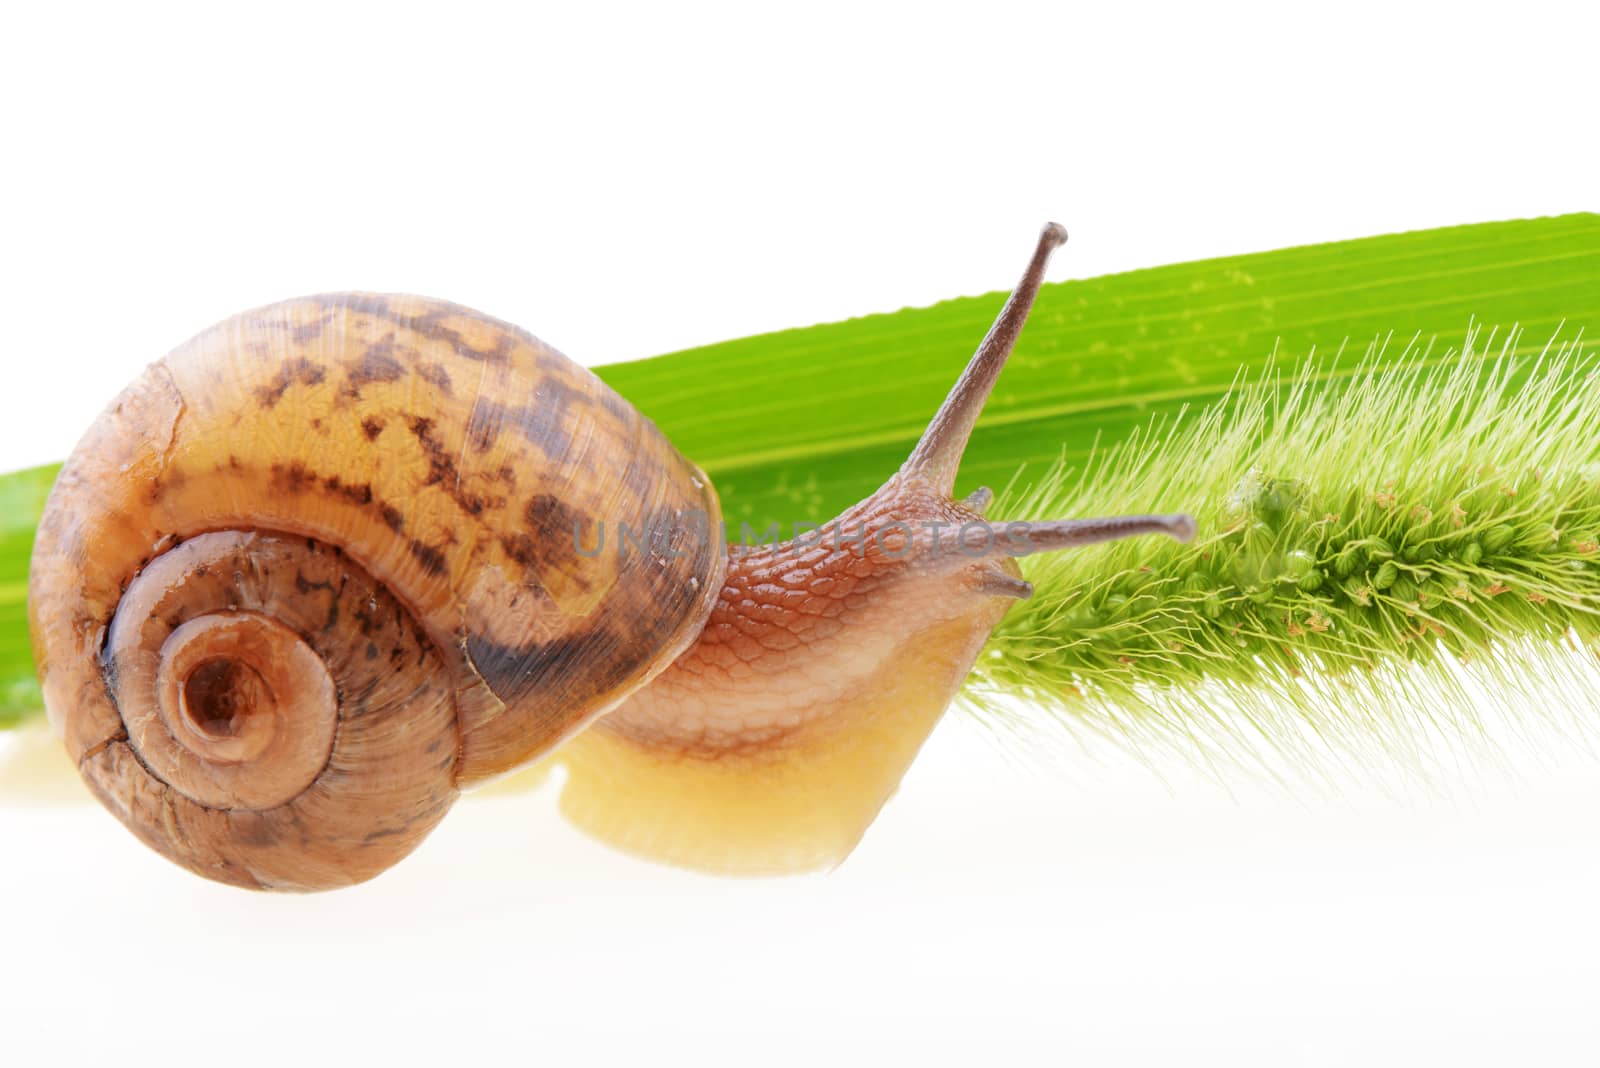 Snail on grass by bbbar